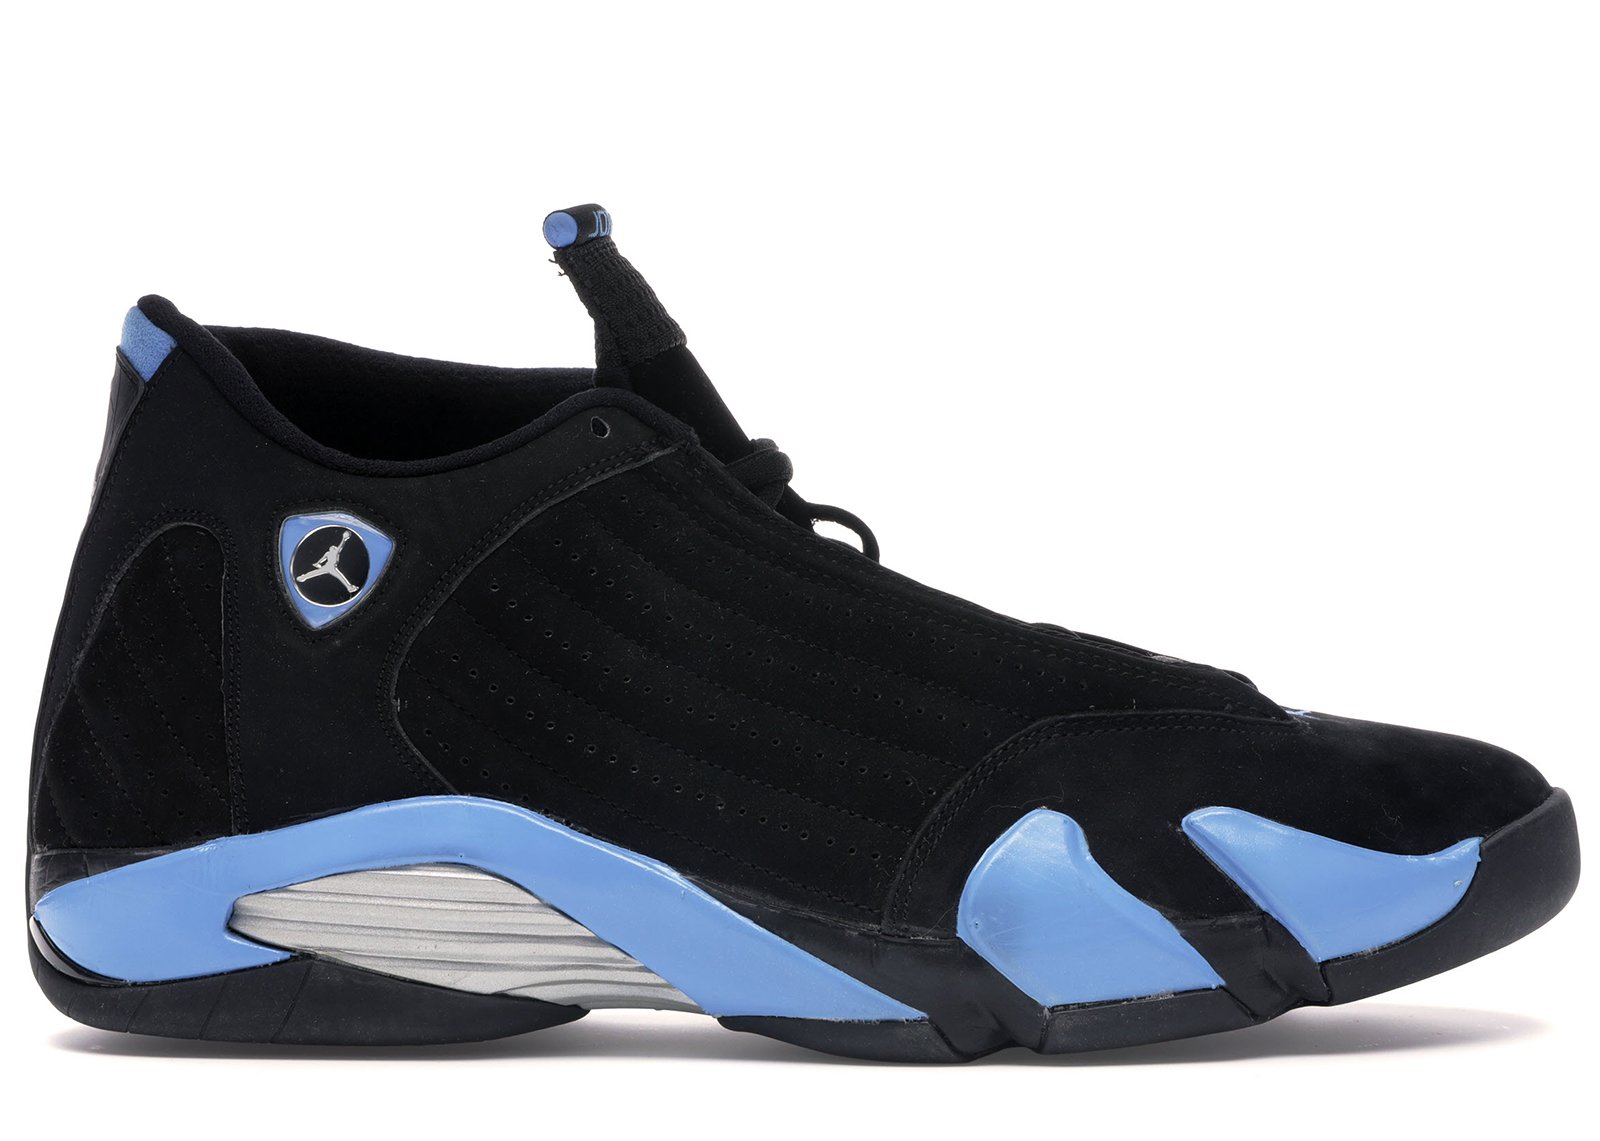 Jordan 14 Retro Black University Blue sneakers